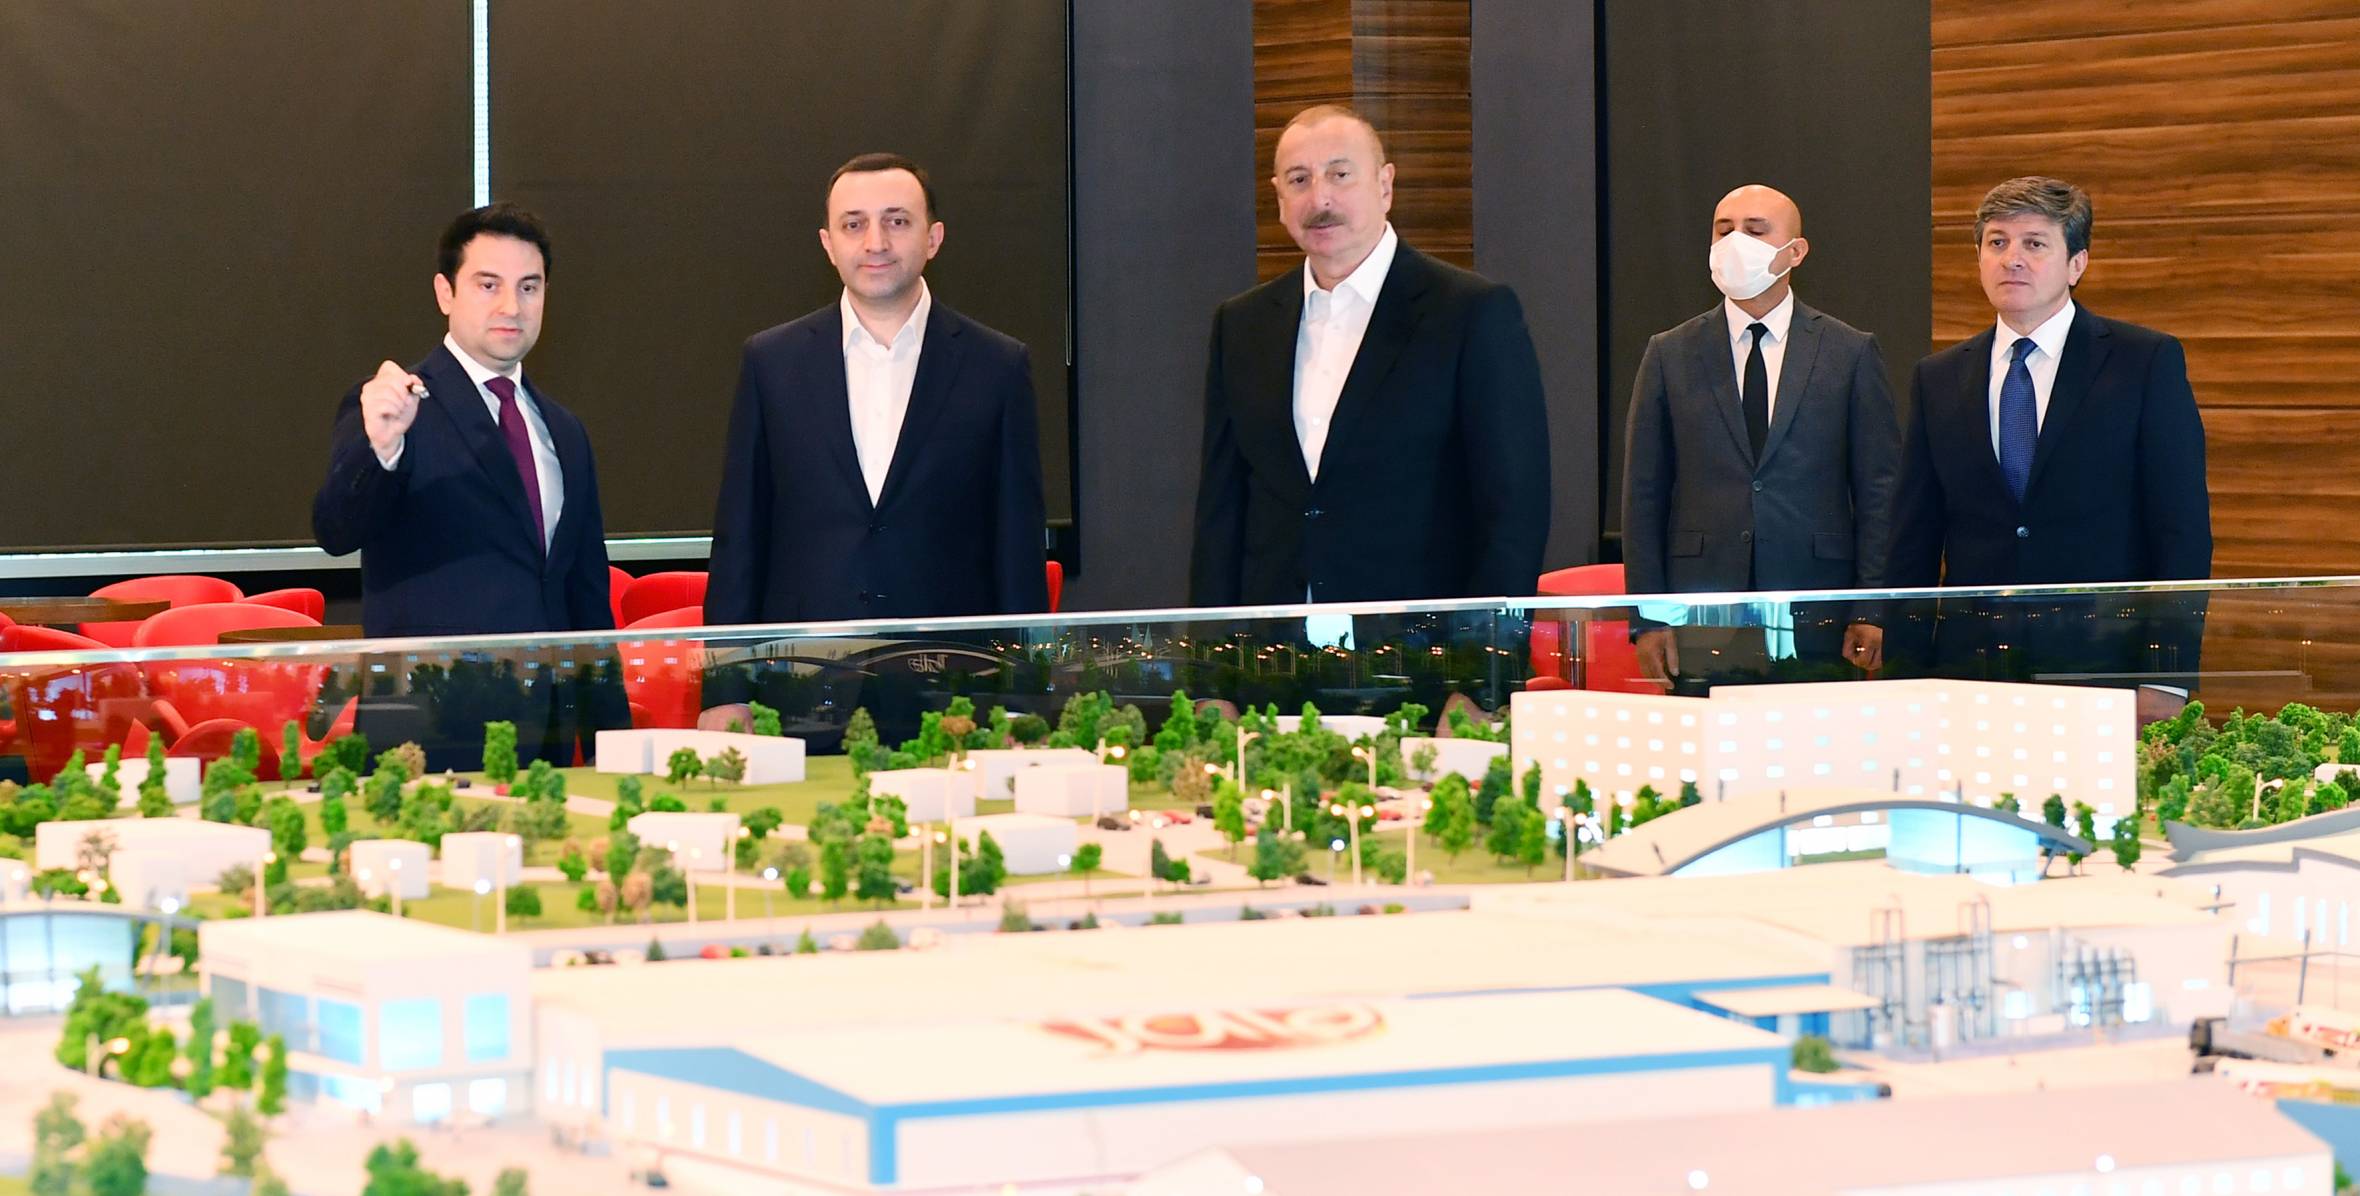 President of the Republic of Azerbaijan and Prime Minister of Georgia Irakli Garibashvili have visited the Gabala Food Village